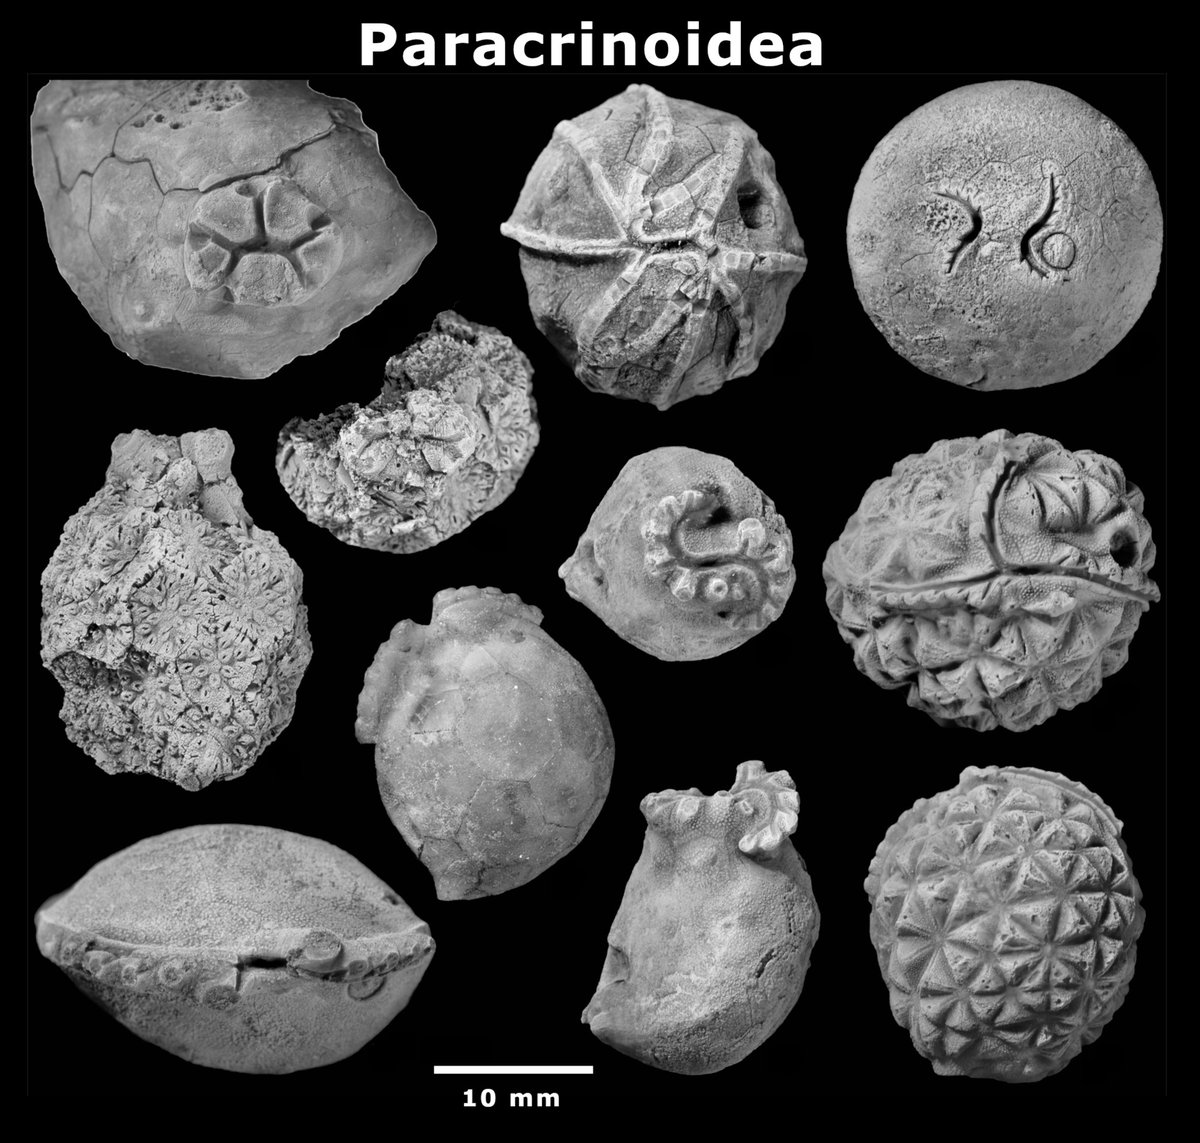 Quantitative assessment of the enigmatic paracrinoids onlinelibrary.wiley.com/doi/10.1111/pa… @MorphoBank @ZENODO_ORG #FossilFriday